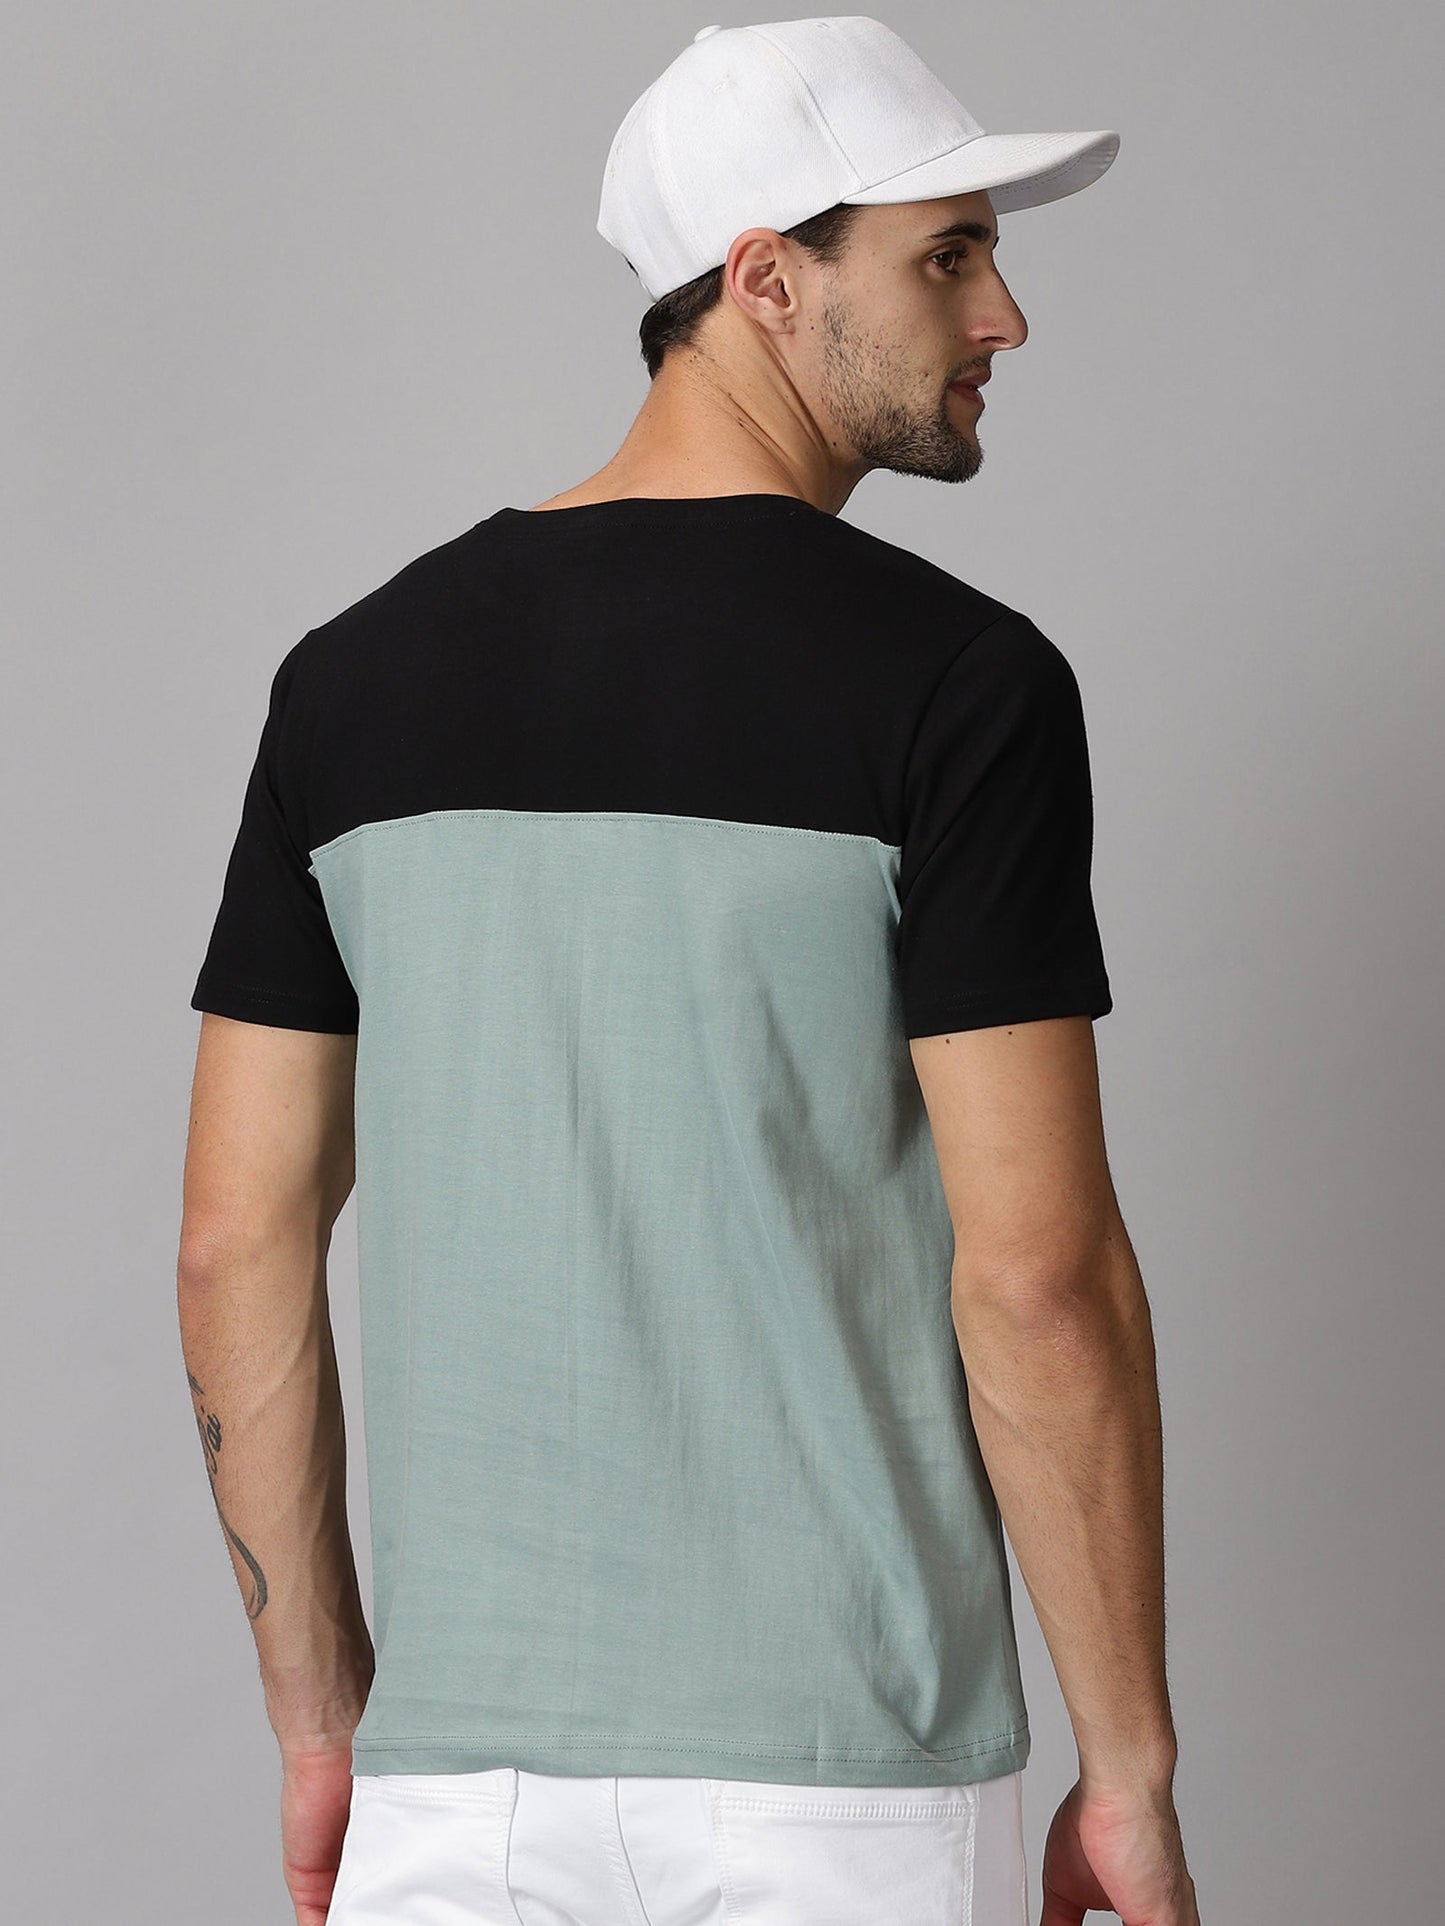 ColourBlocked T-Shirt: Black-C Green